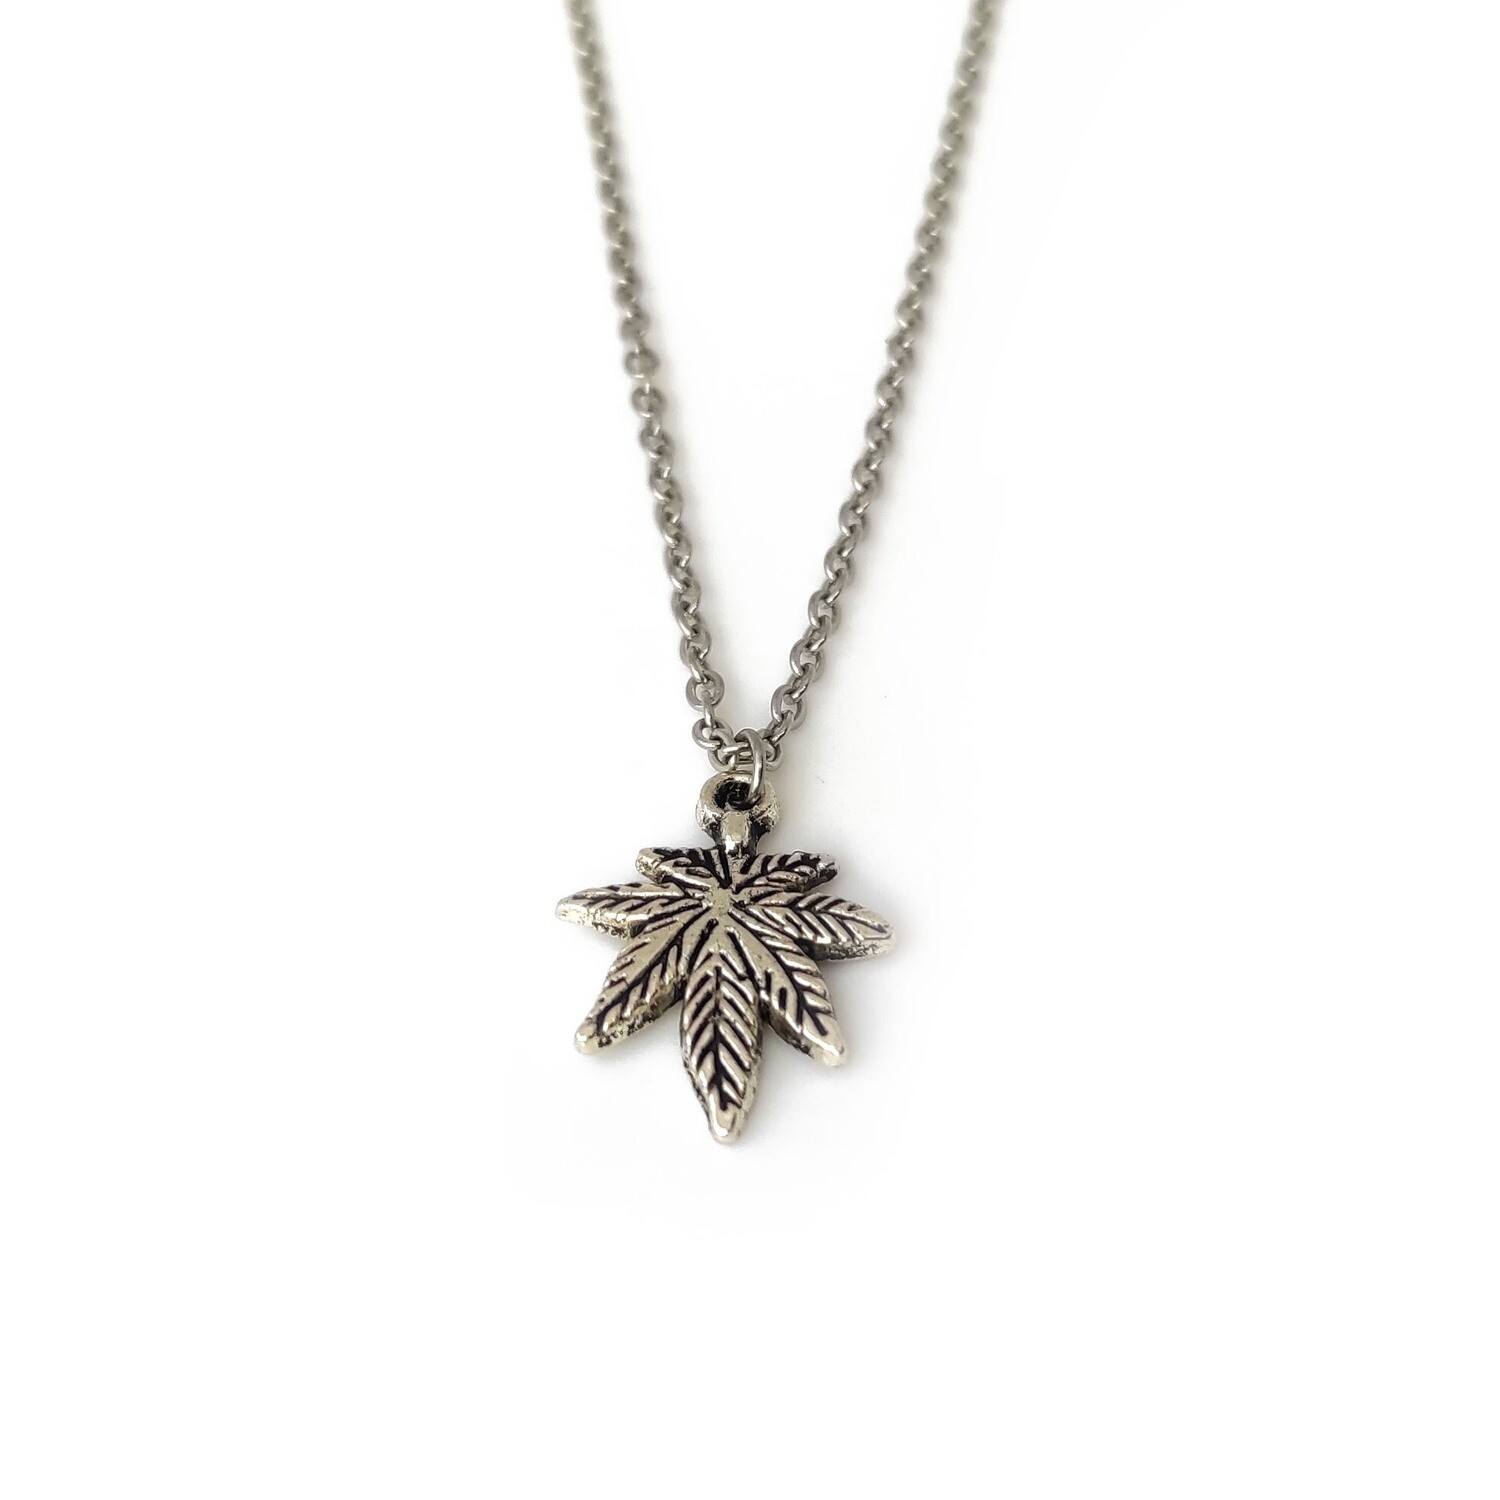 Cannabis (Hemp) leaf necklace